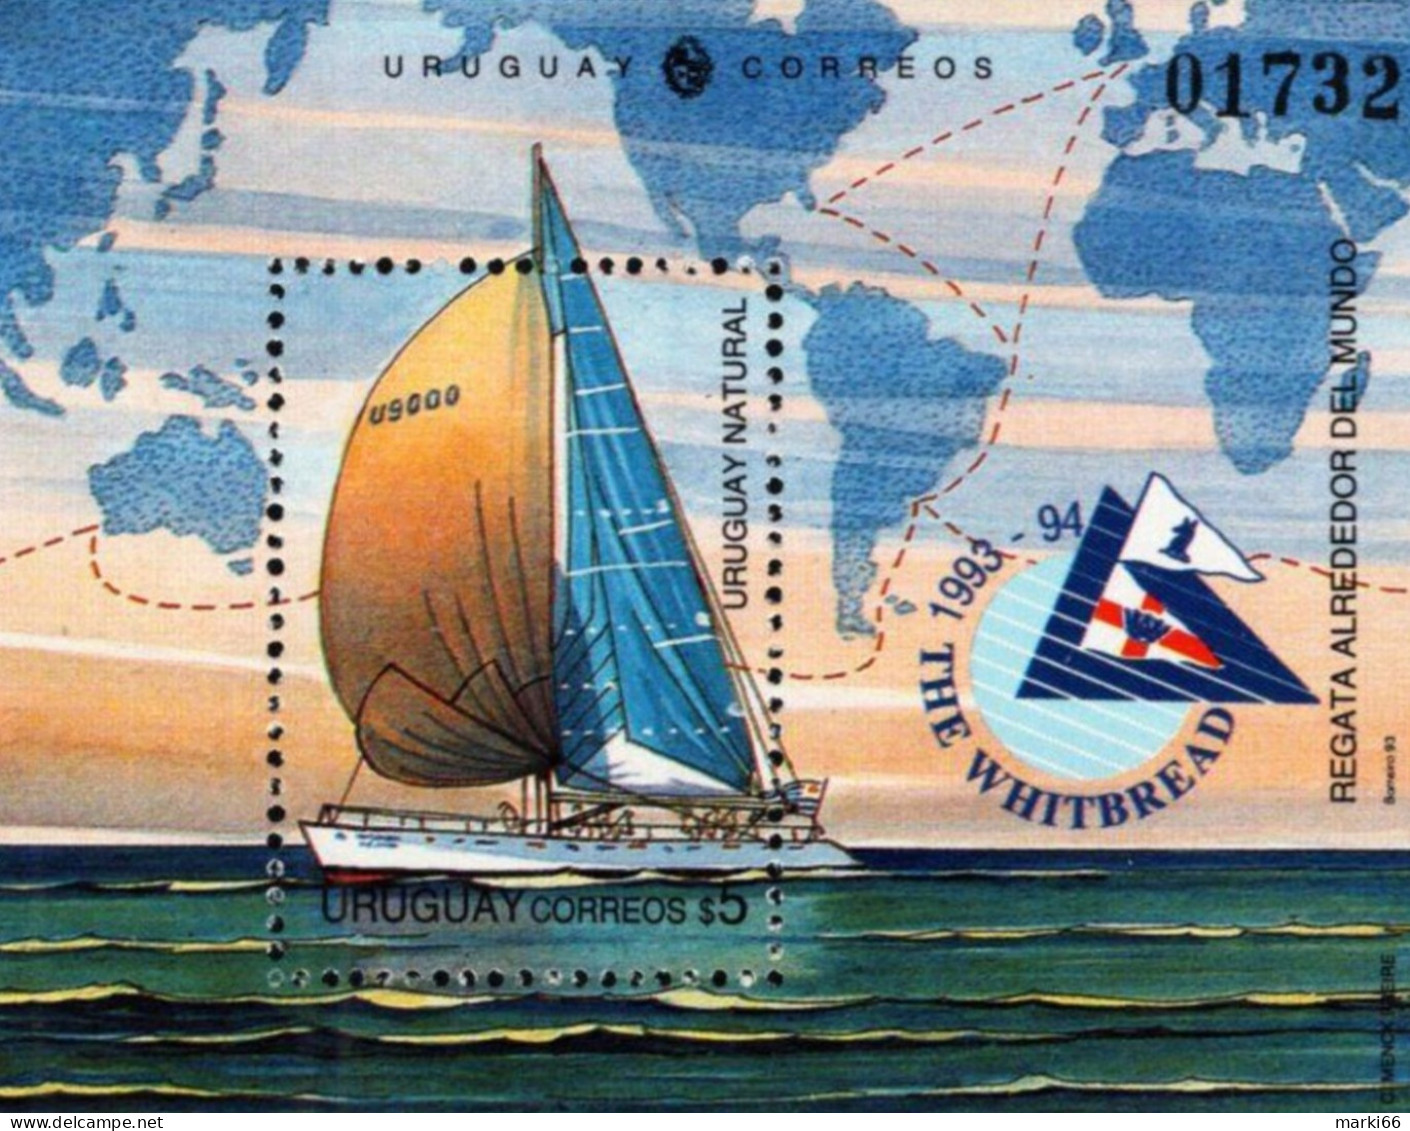 Uruguay - 1993 - Whitbread Trans-global Yacht Race - Mint Souvenir Sheet - Uruguay